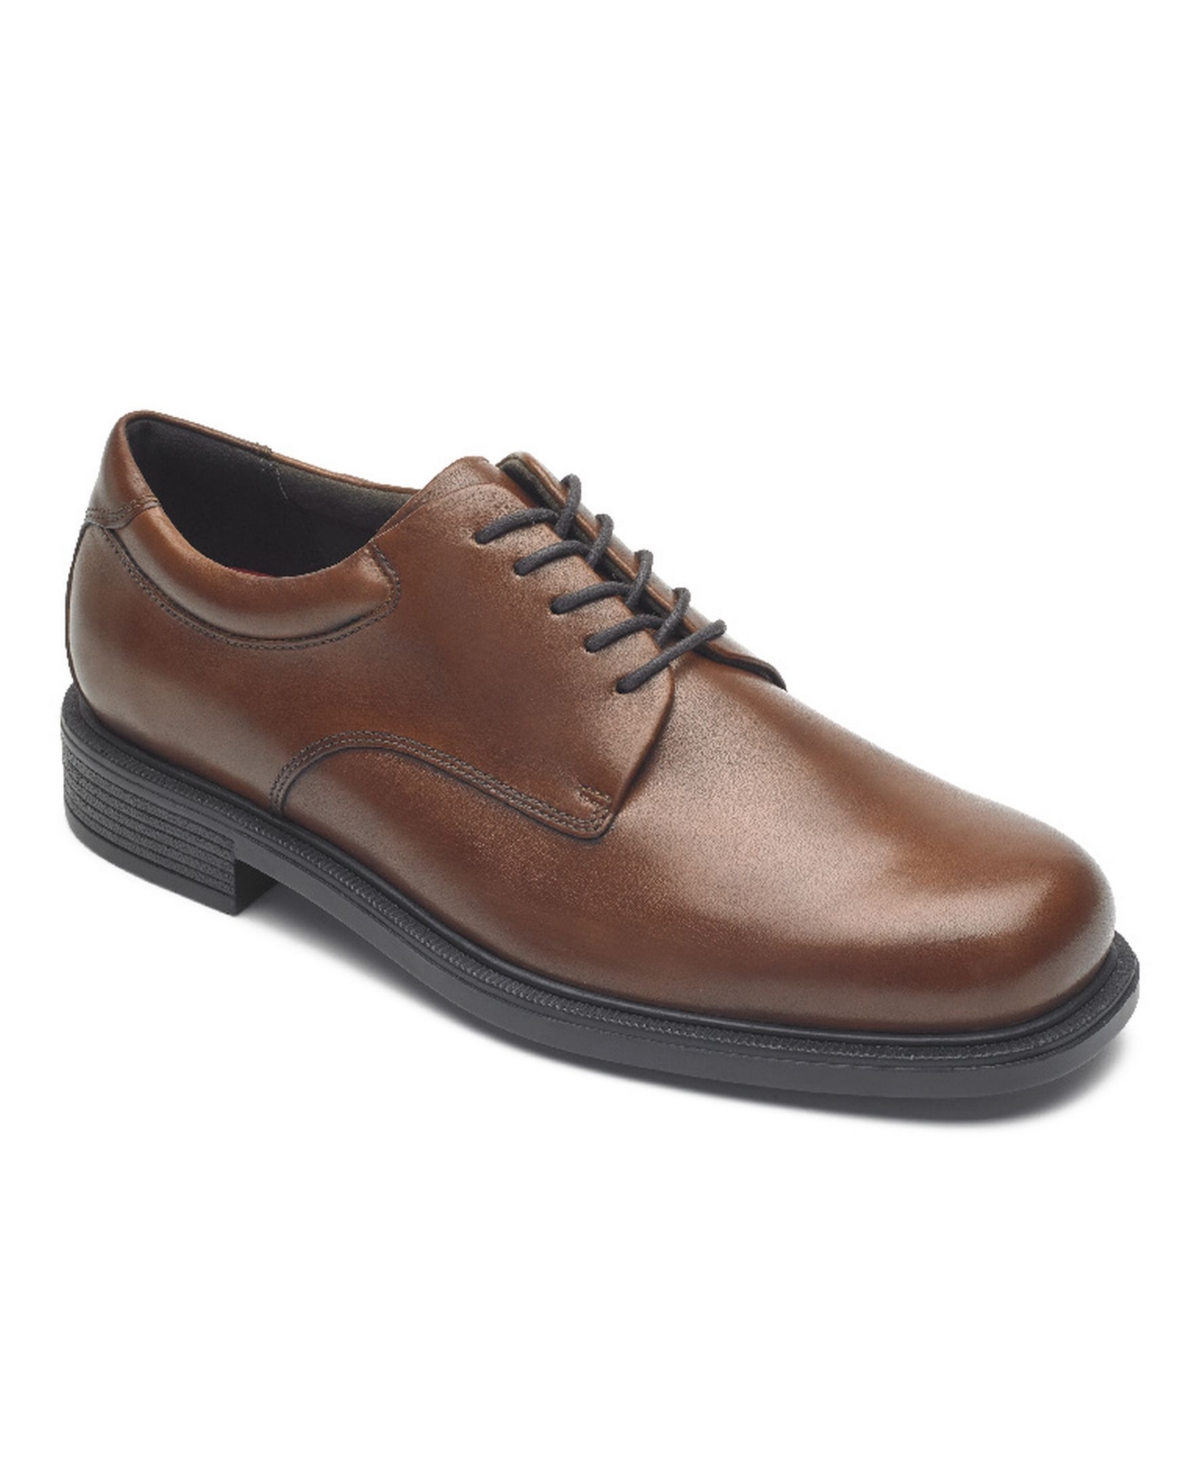 Men's Margin Casual Shoes - New Brown